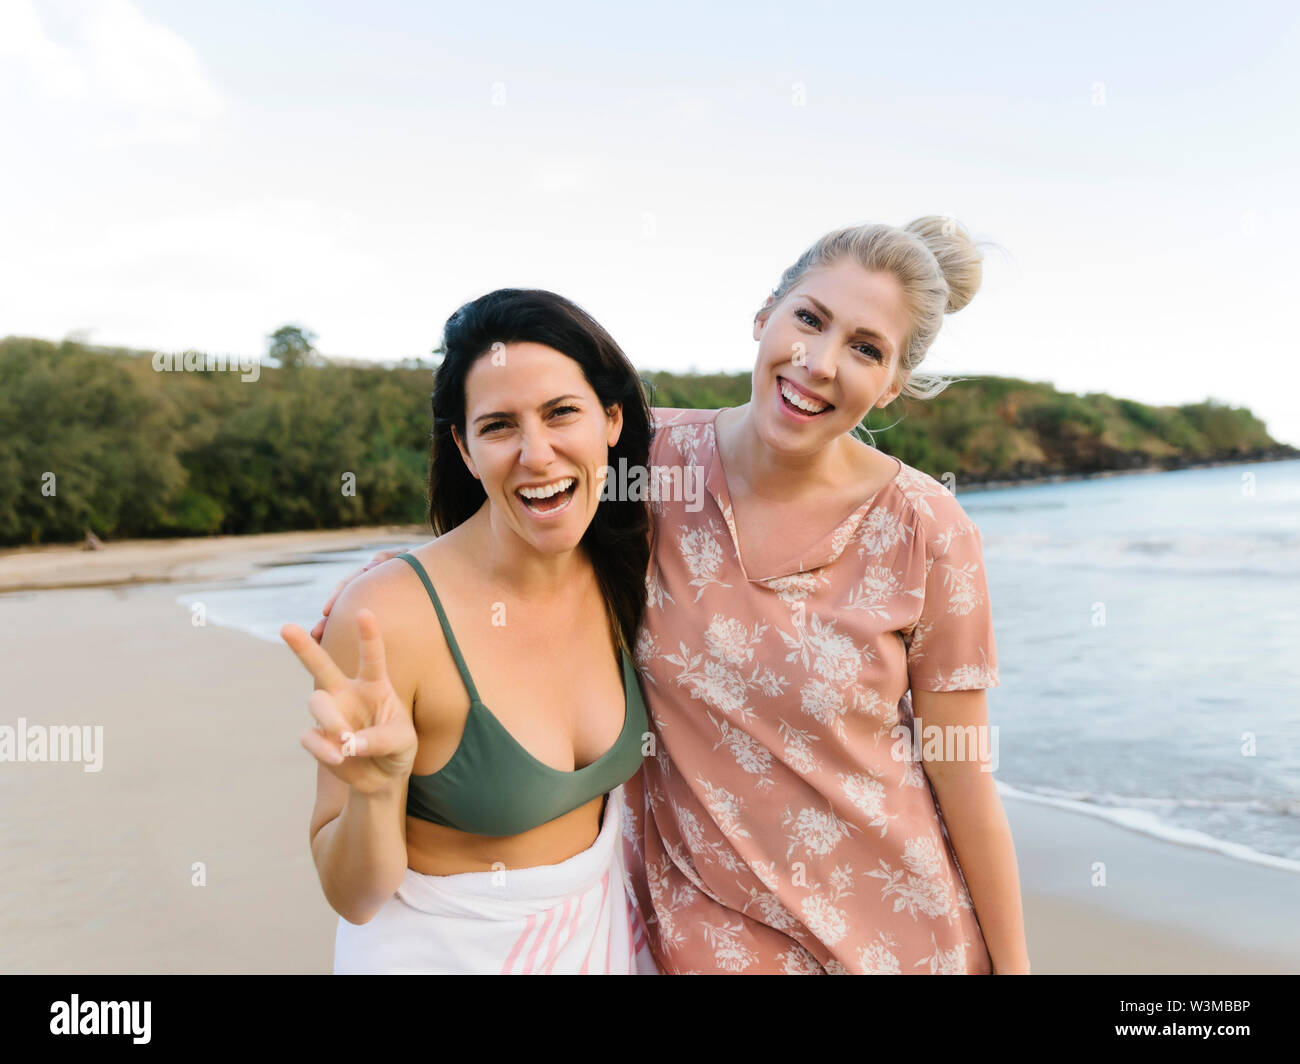 Smiling women on beach Stock Photo